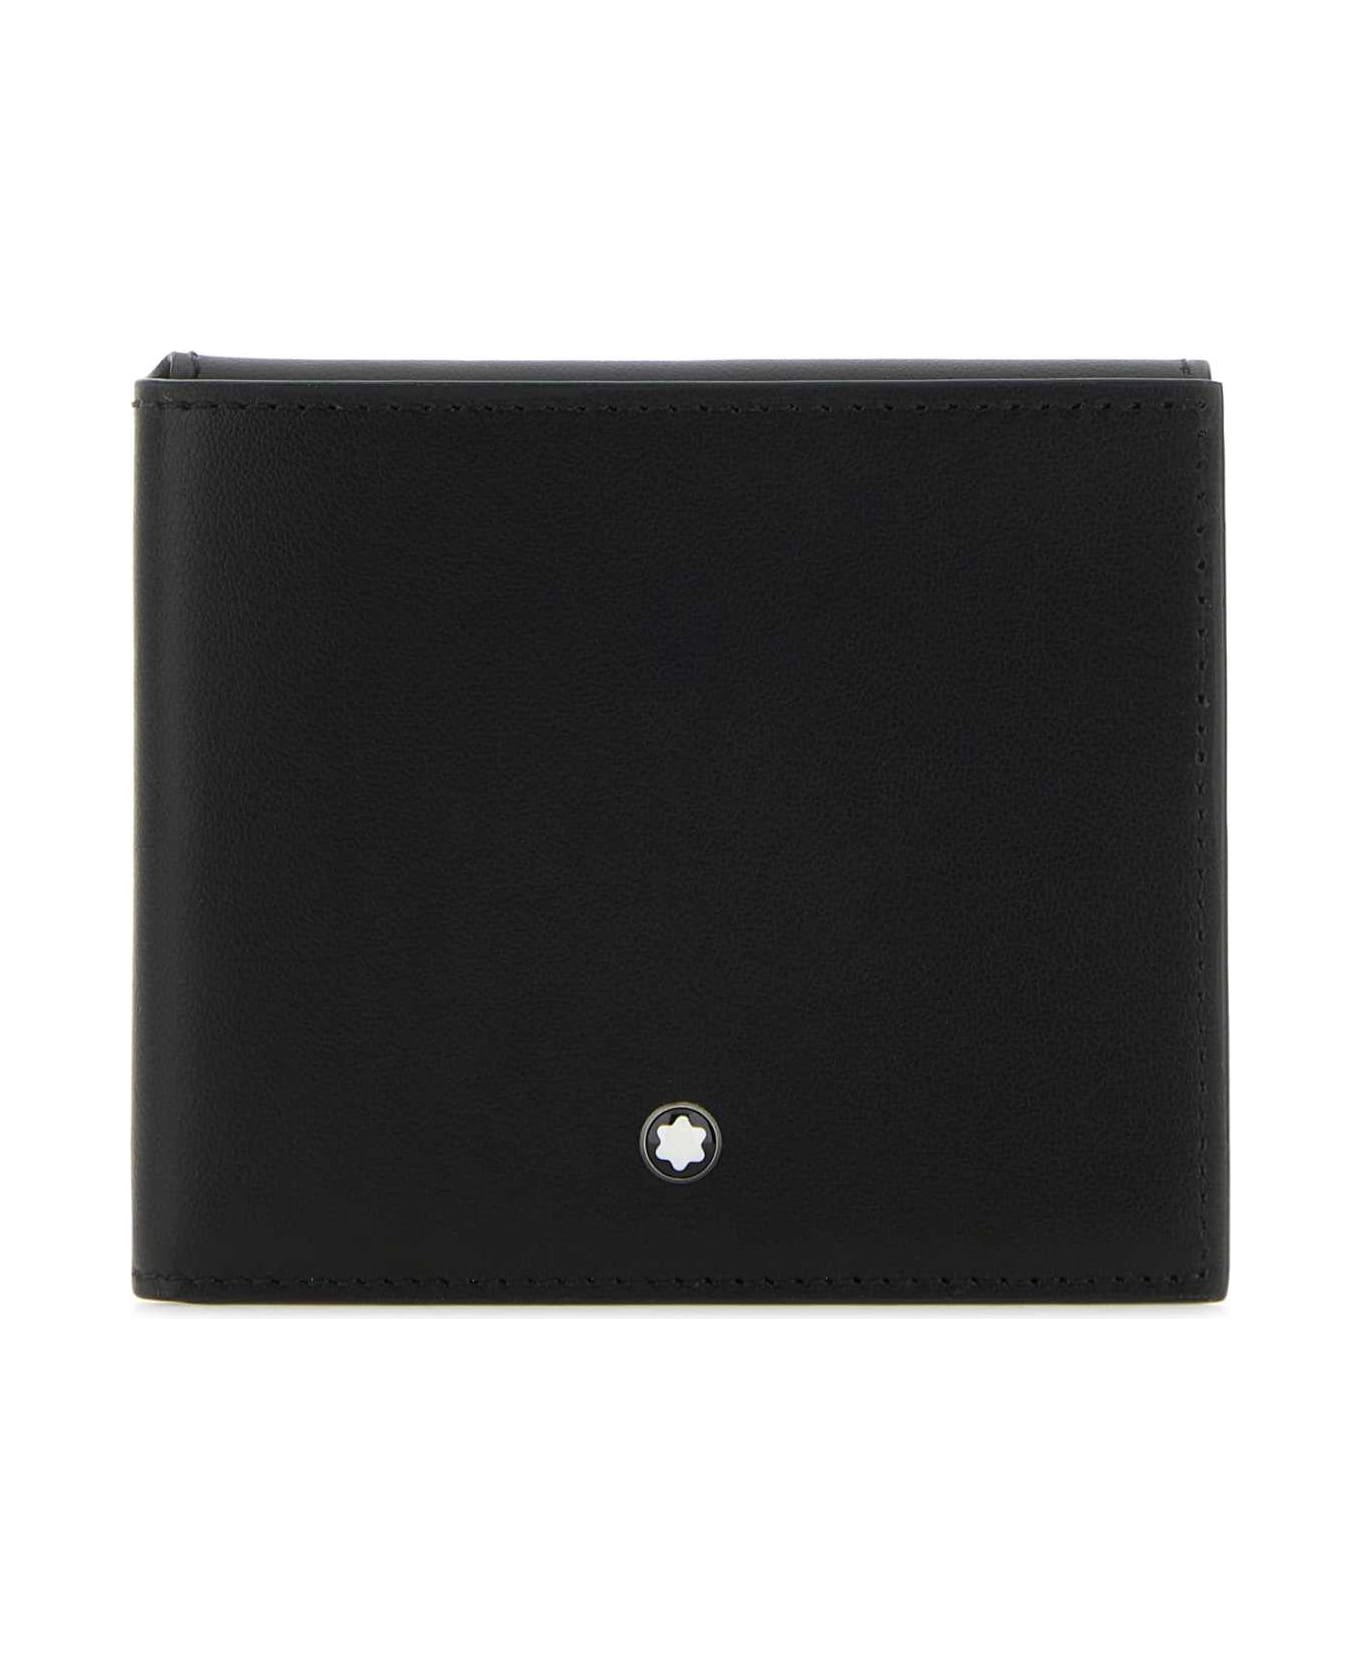 Montblanc Black Leather Wallet - BLACK